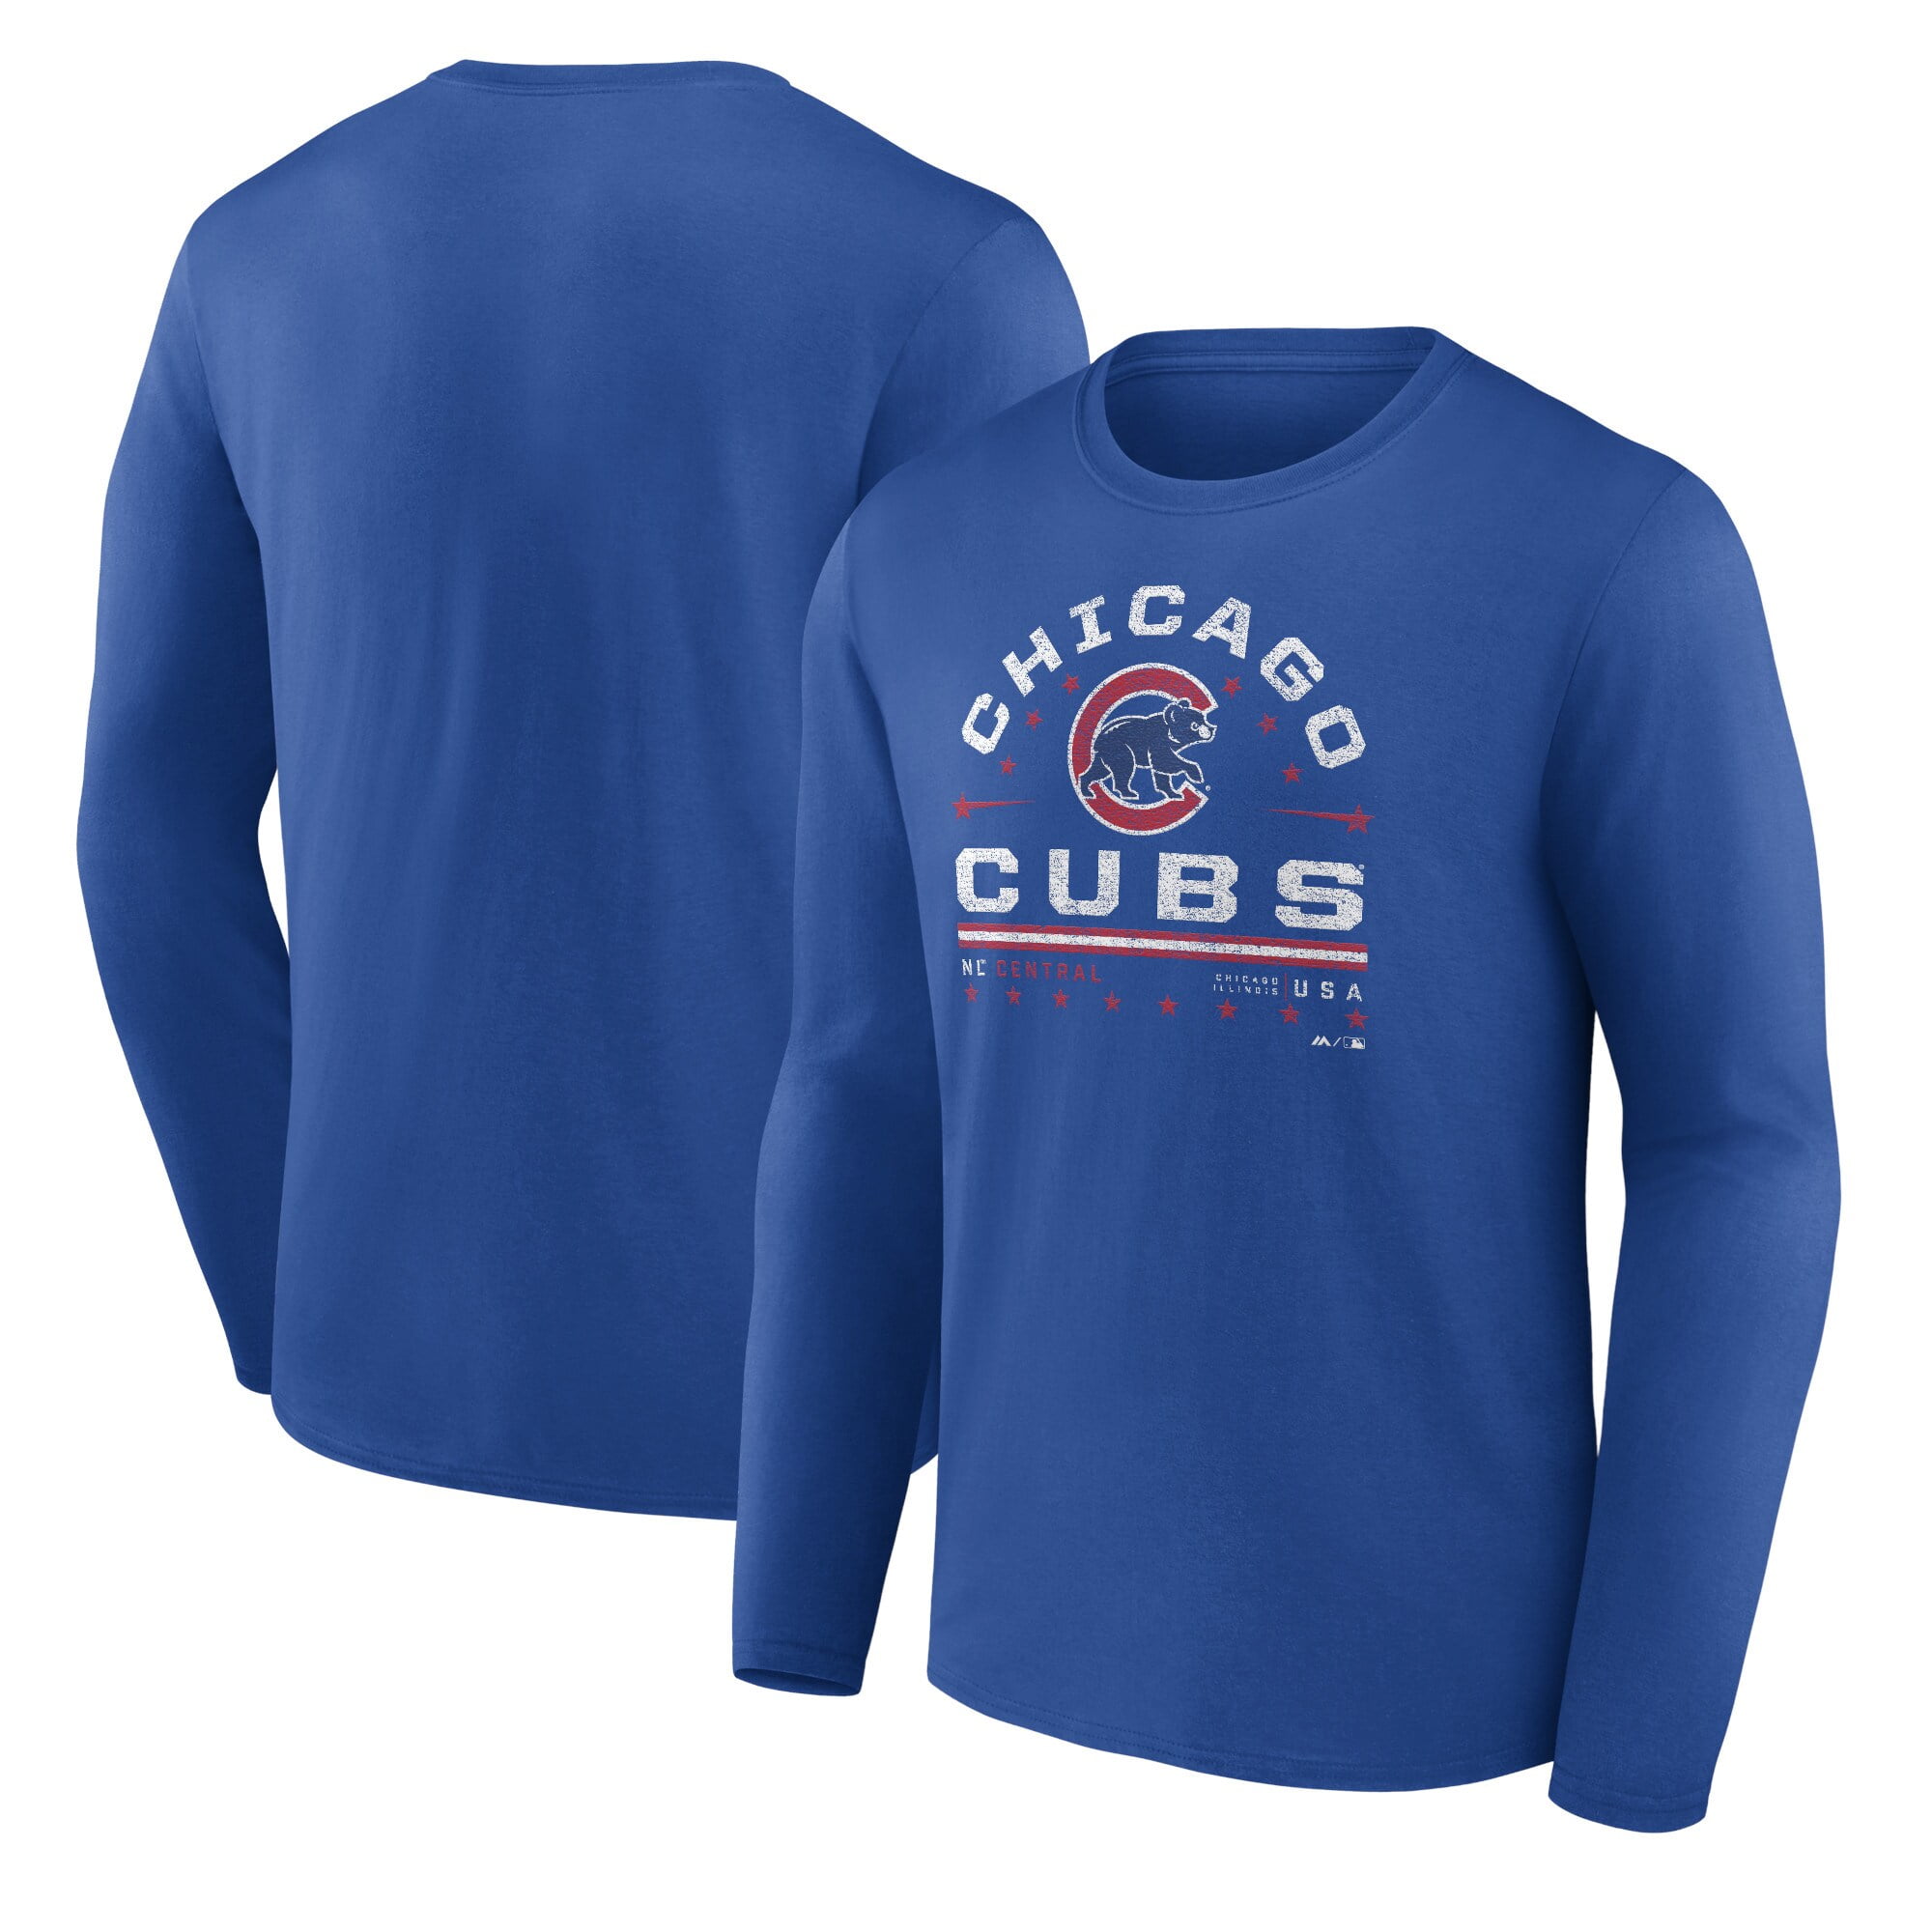 Men's Fanatics Branded Royal Chicago Cubs Team Long Sleeve T-Shirt ...